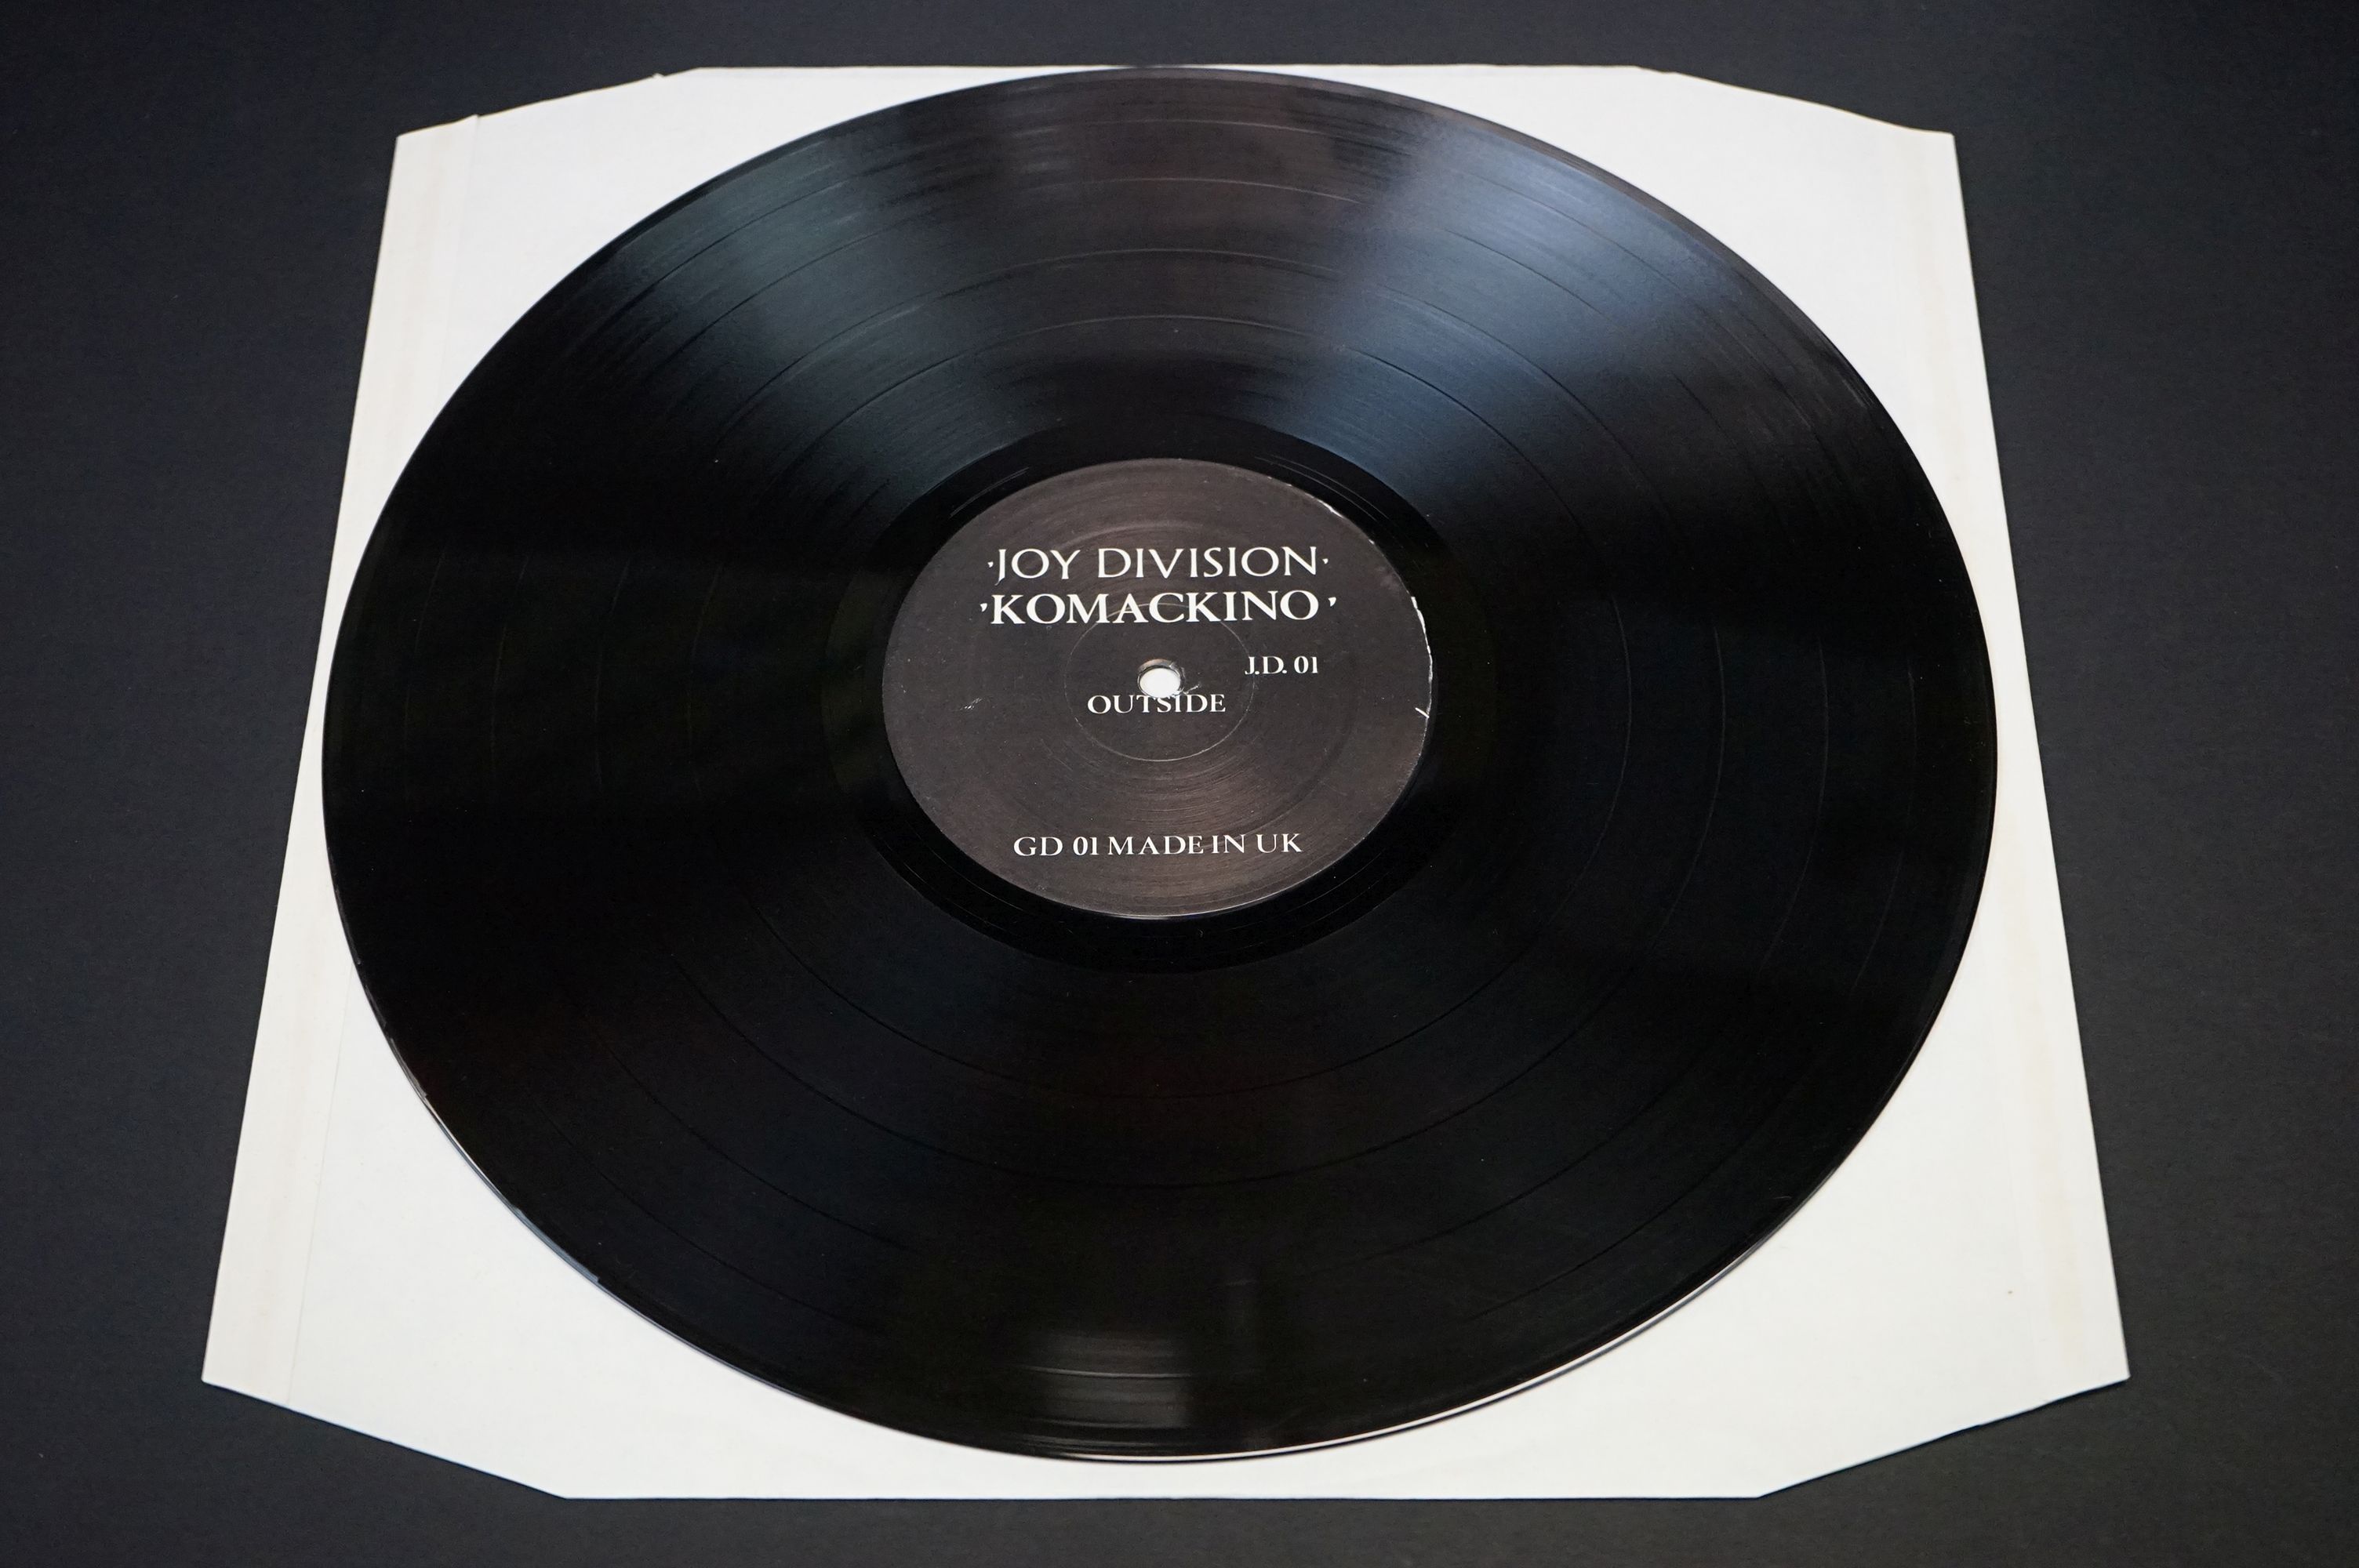 Vinyl – 2 rare Joy Division private pressing albums to include Joy Division – Komackino (Original - Image 3 of 12